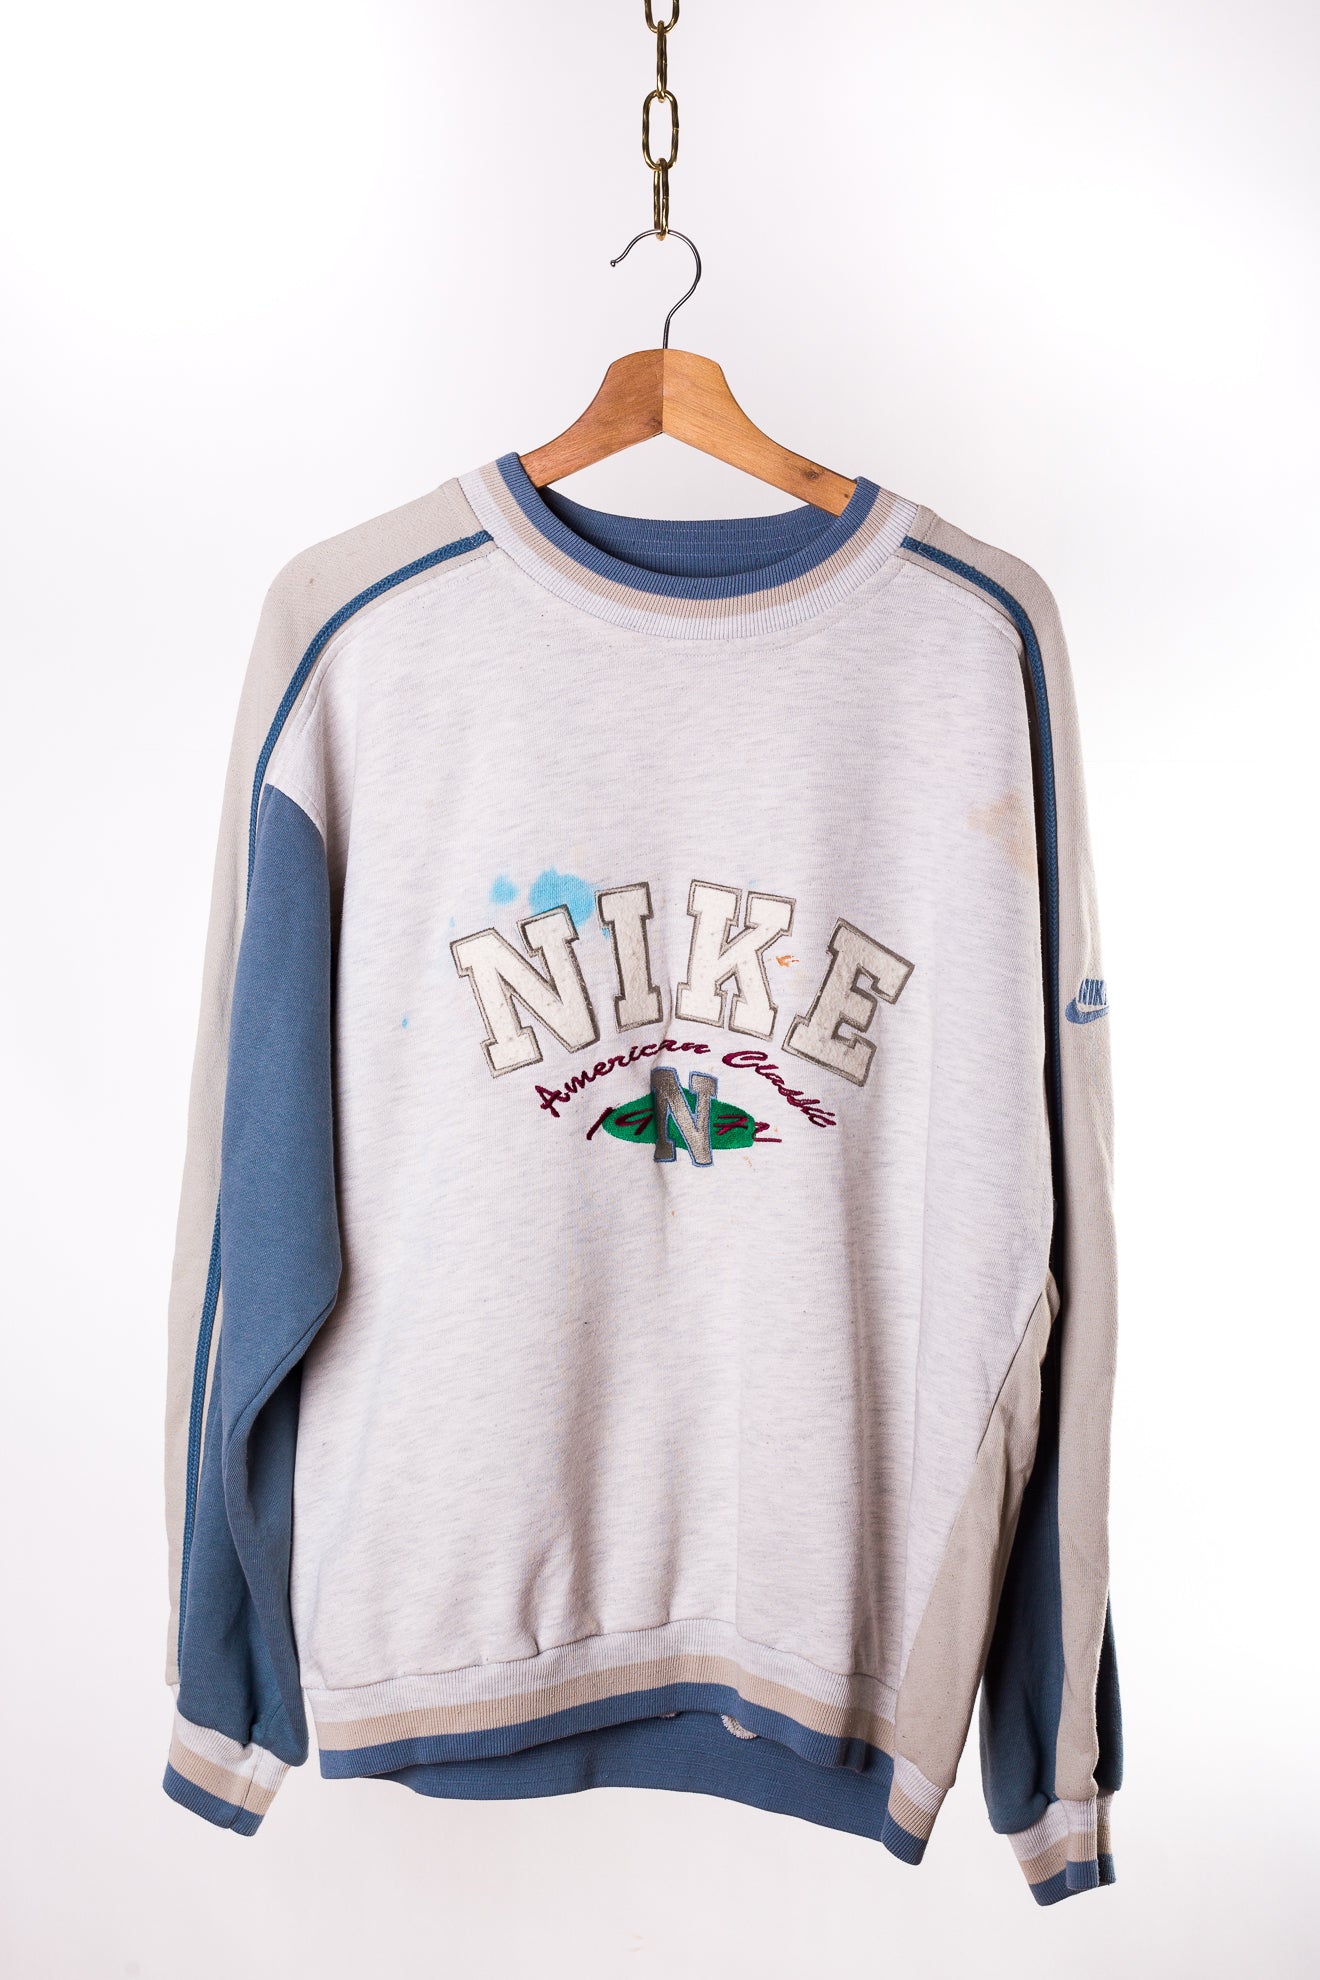 vintage-nike-sweater